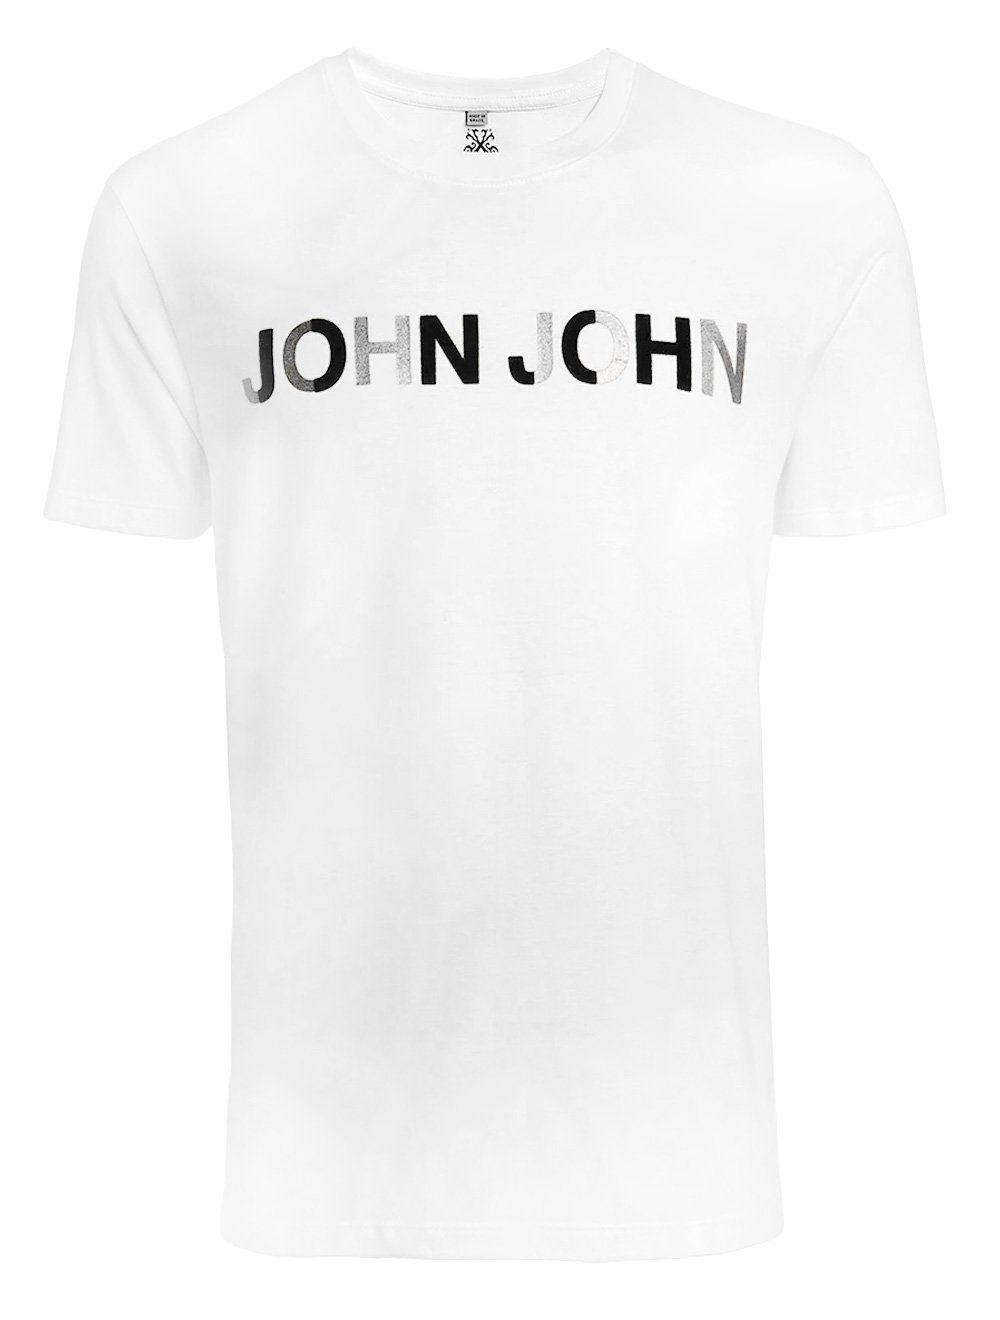 Camiseta John John Masculina Triple Vision Branca em Promoção na Americanas